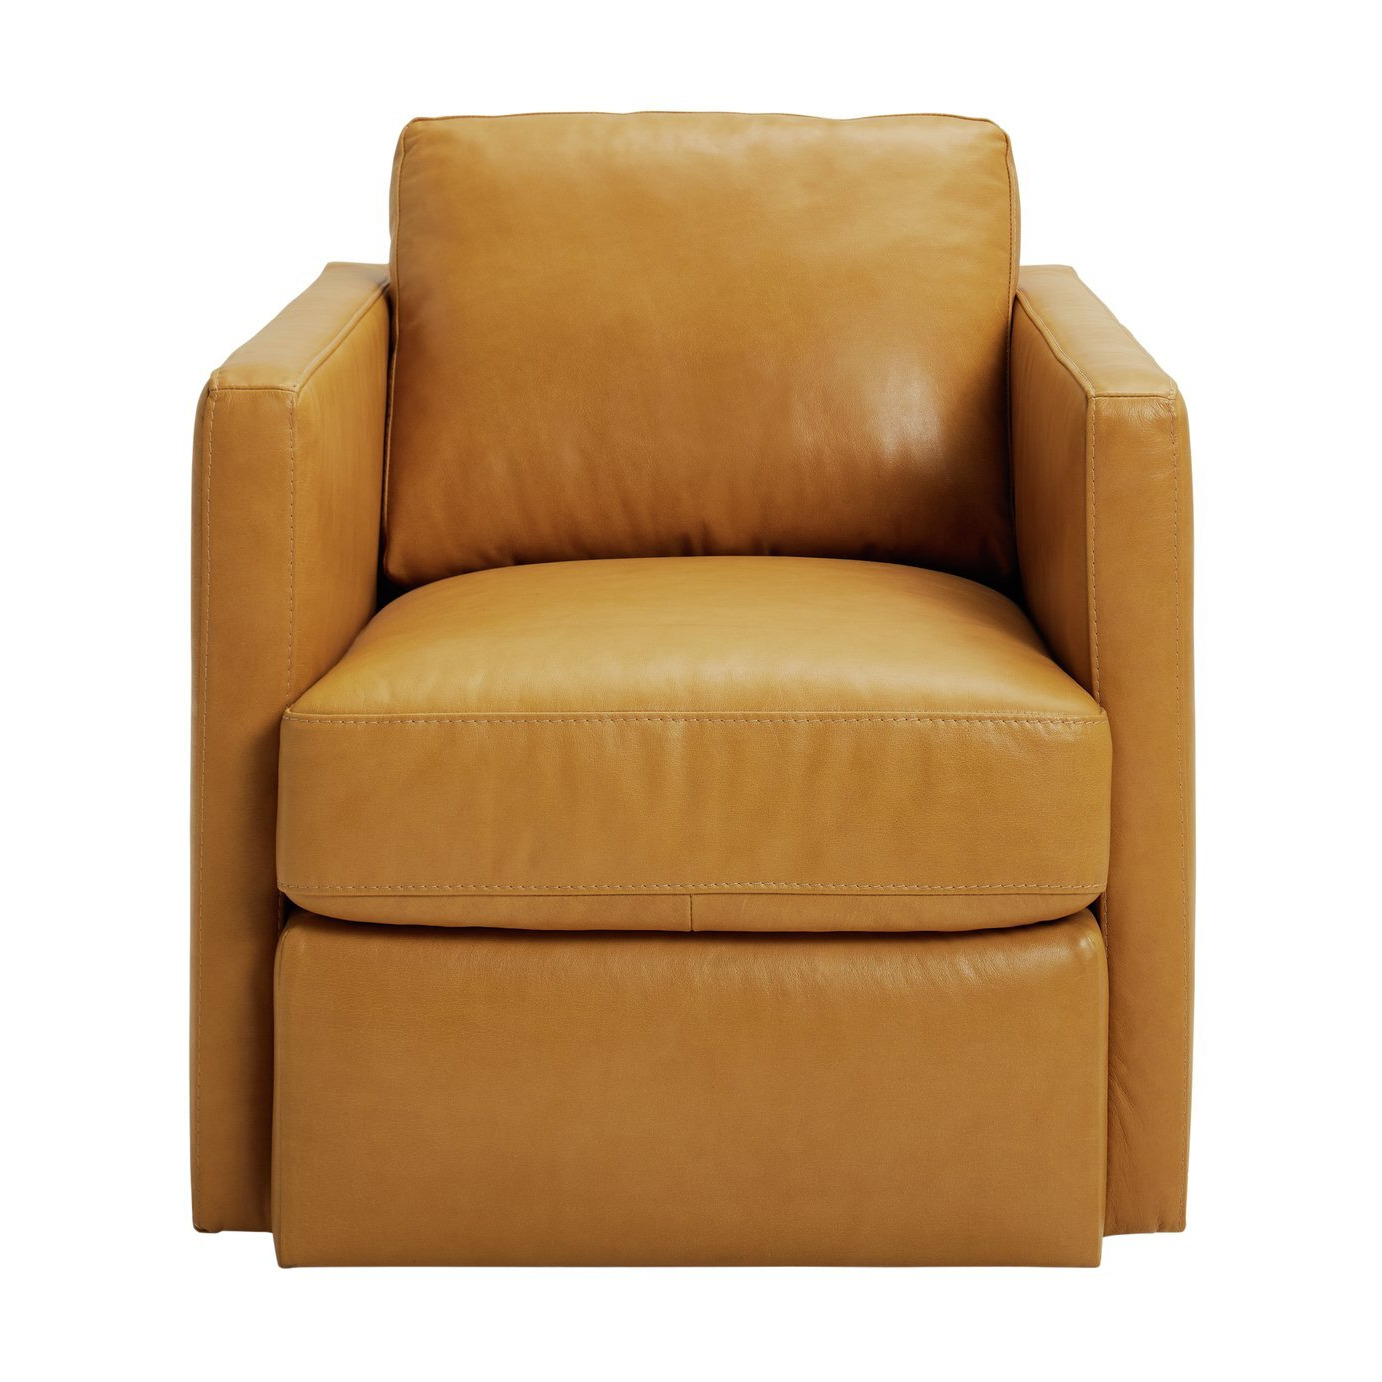 Habitat Durham Leather Swivel Chair - Tan - image 1